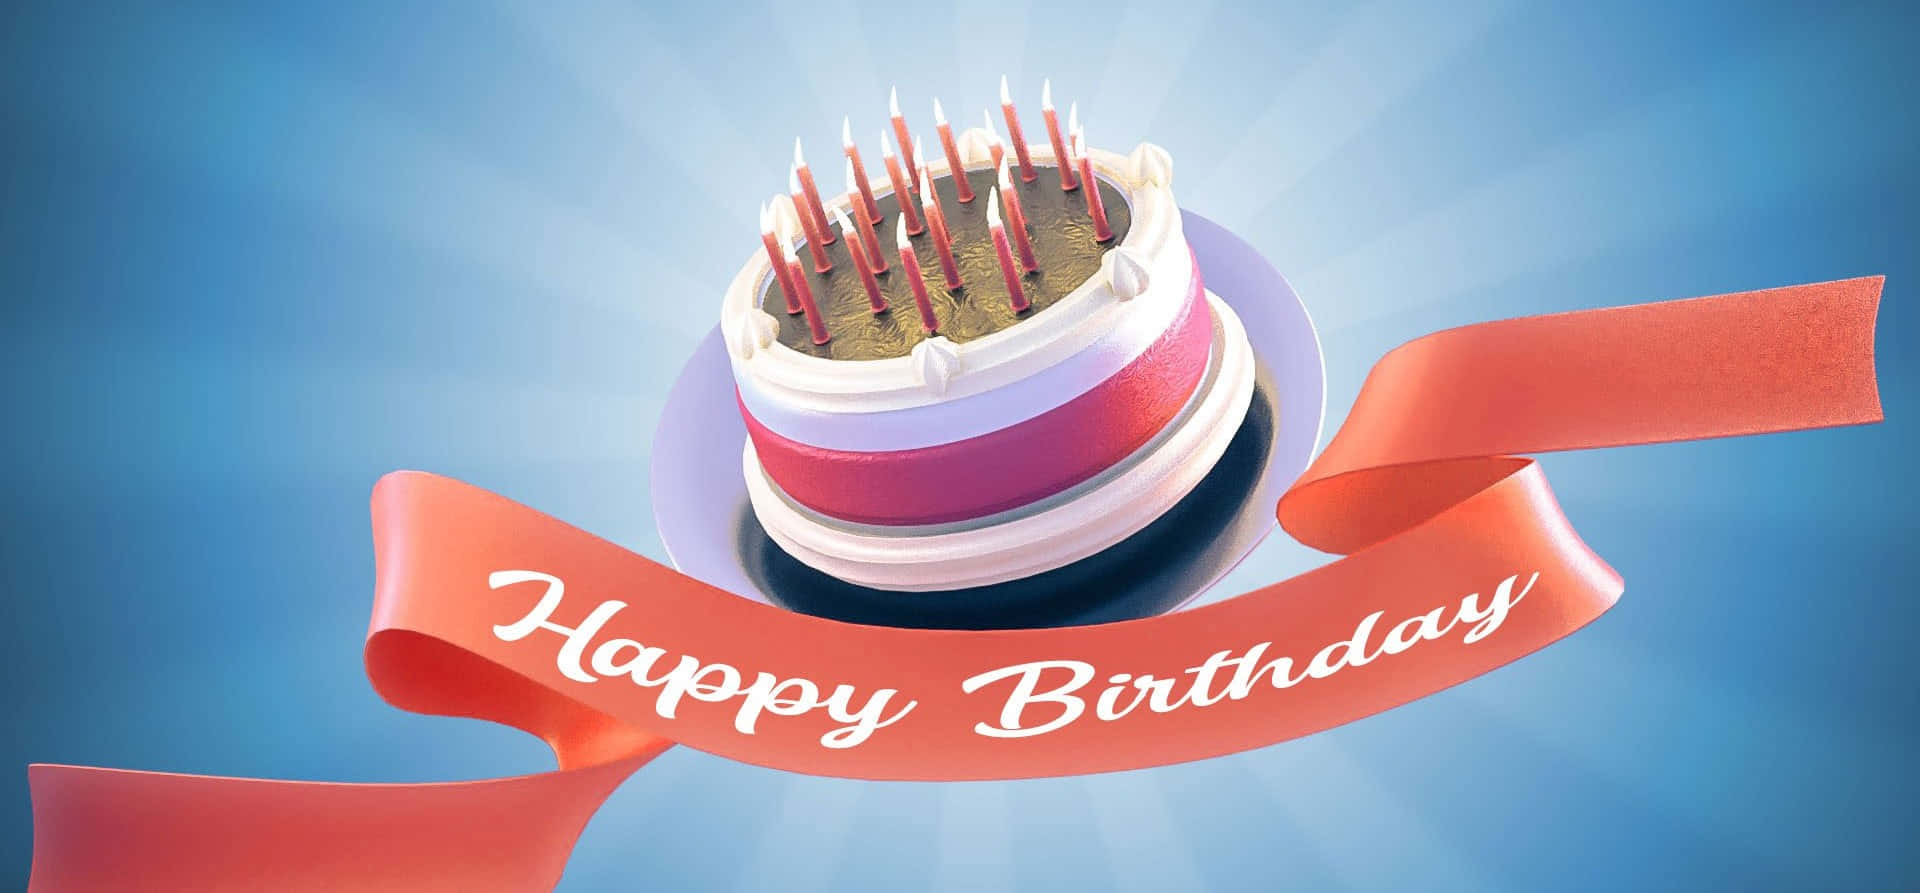 Celebrate with Joy - Delightful Birthday Wishes Background